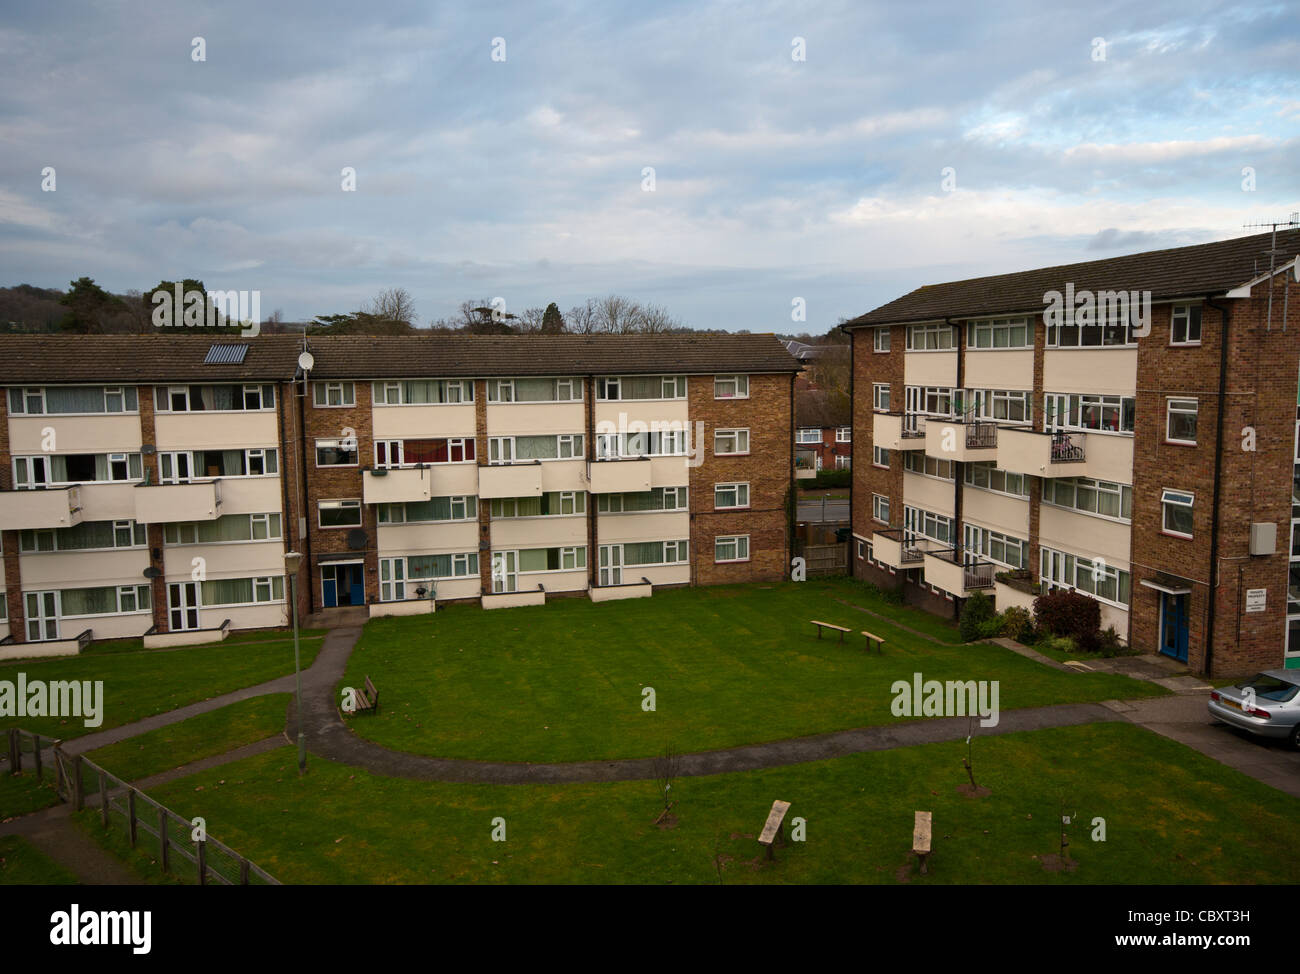 UK Residential council Housing Estate Estates With Blocks Of Maisonettes Flats Stock Photo